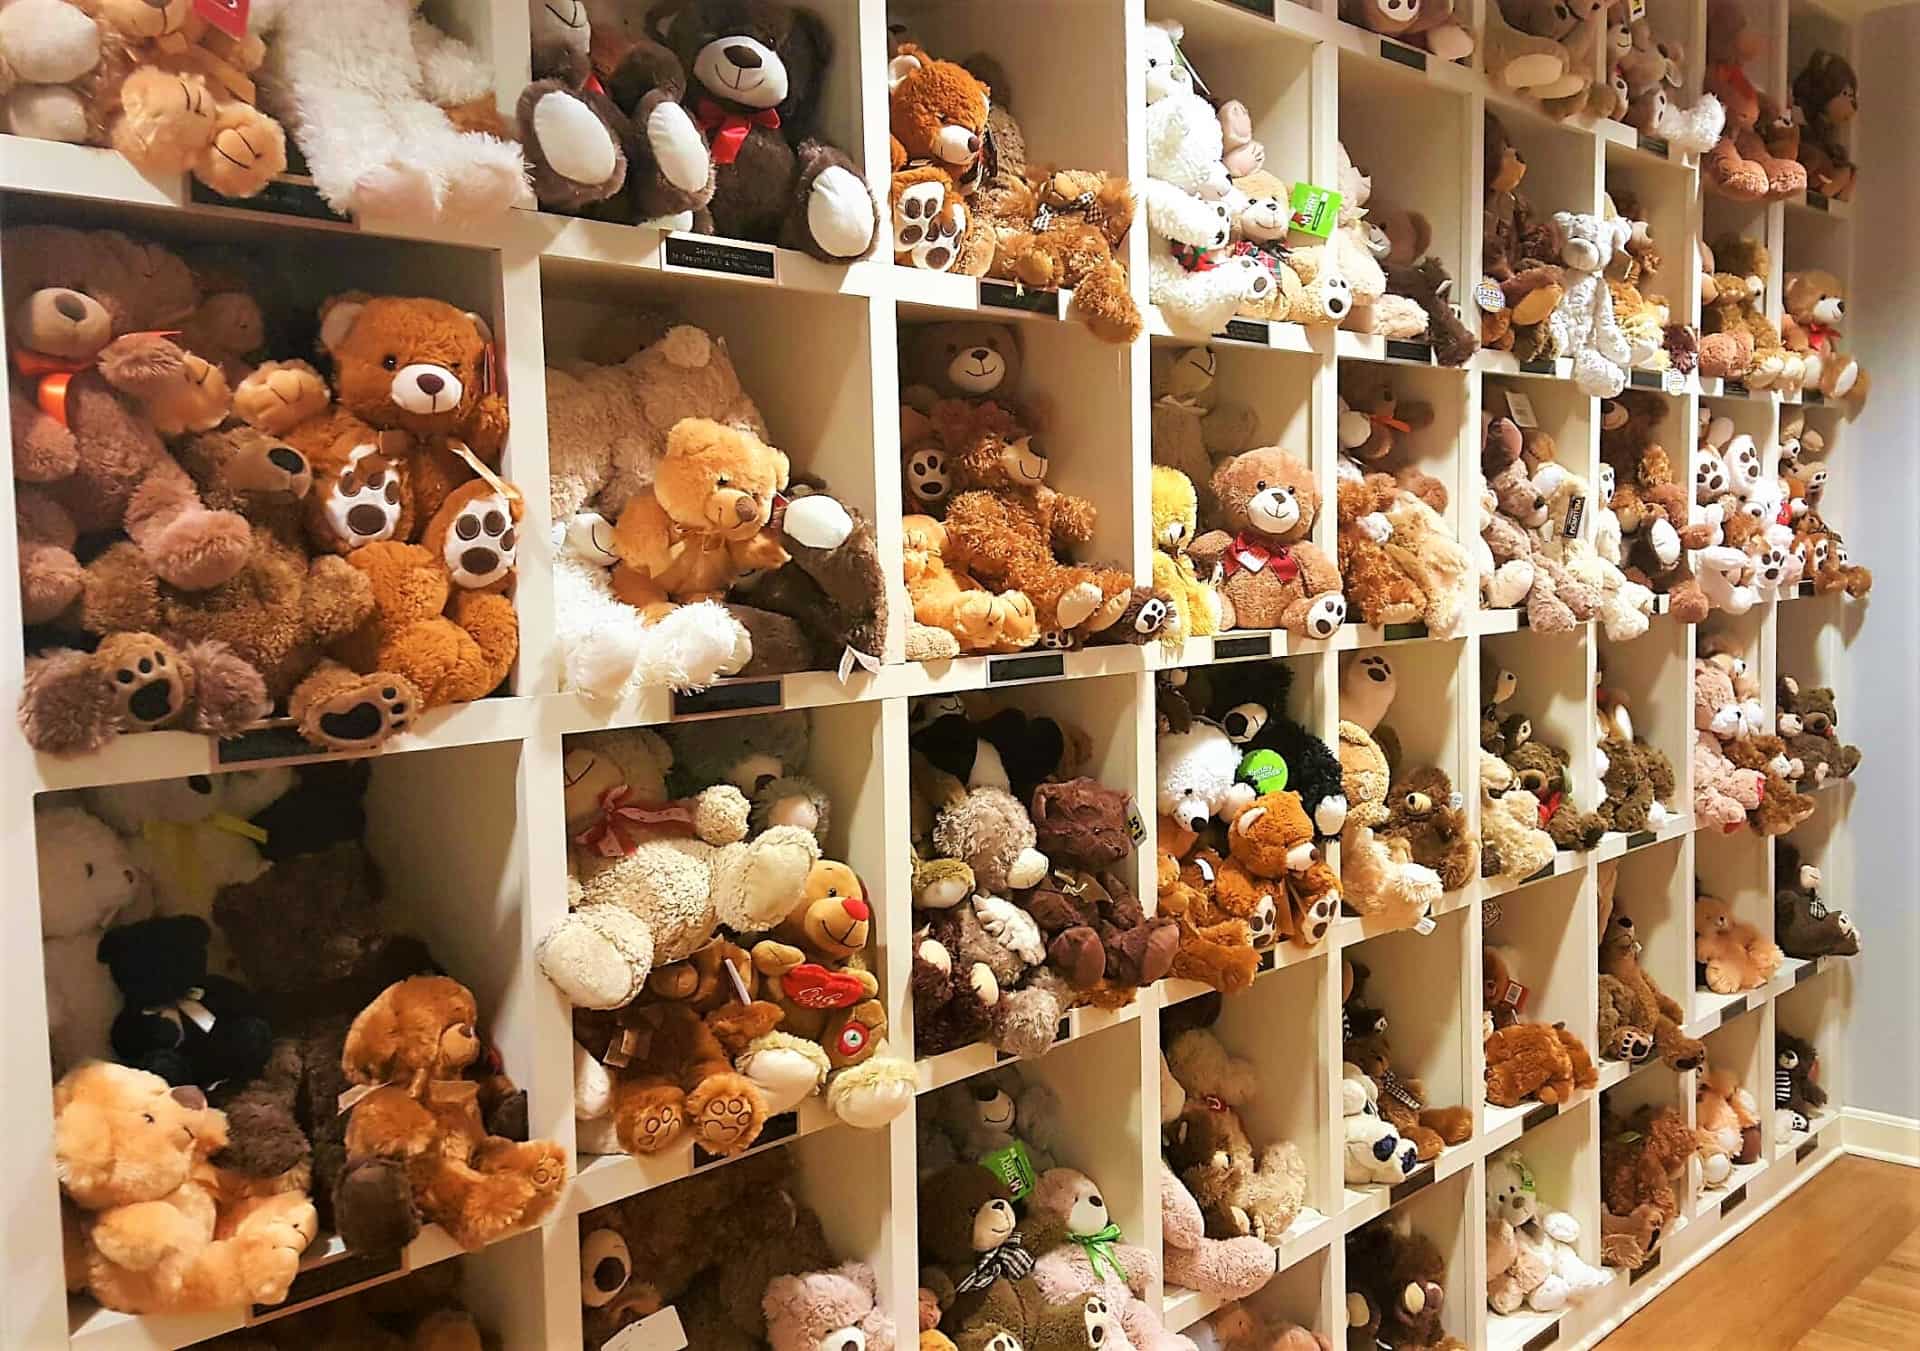 Teddy bears comfort children at Memphis Child Advocacy Center